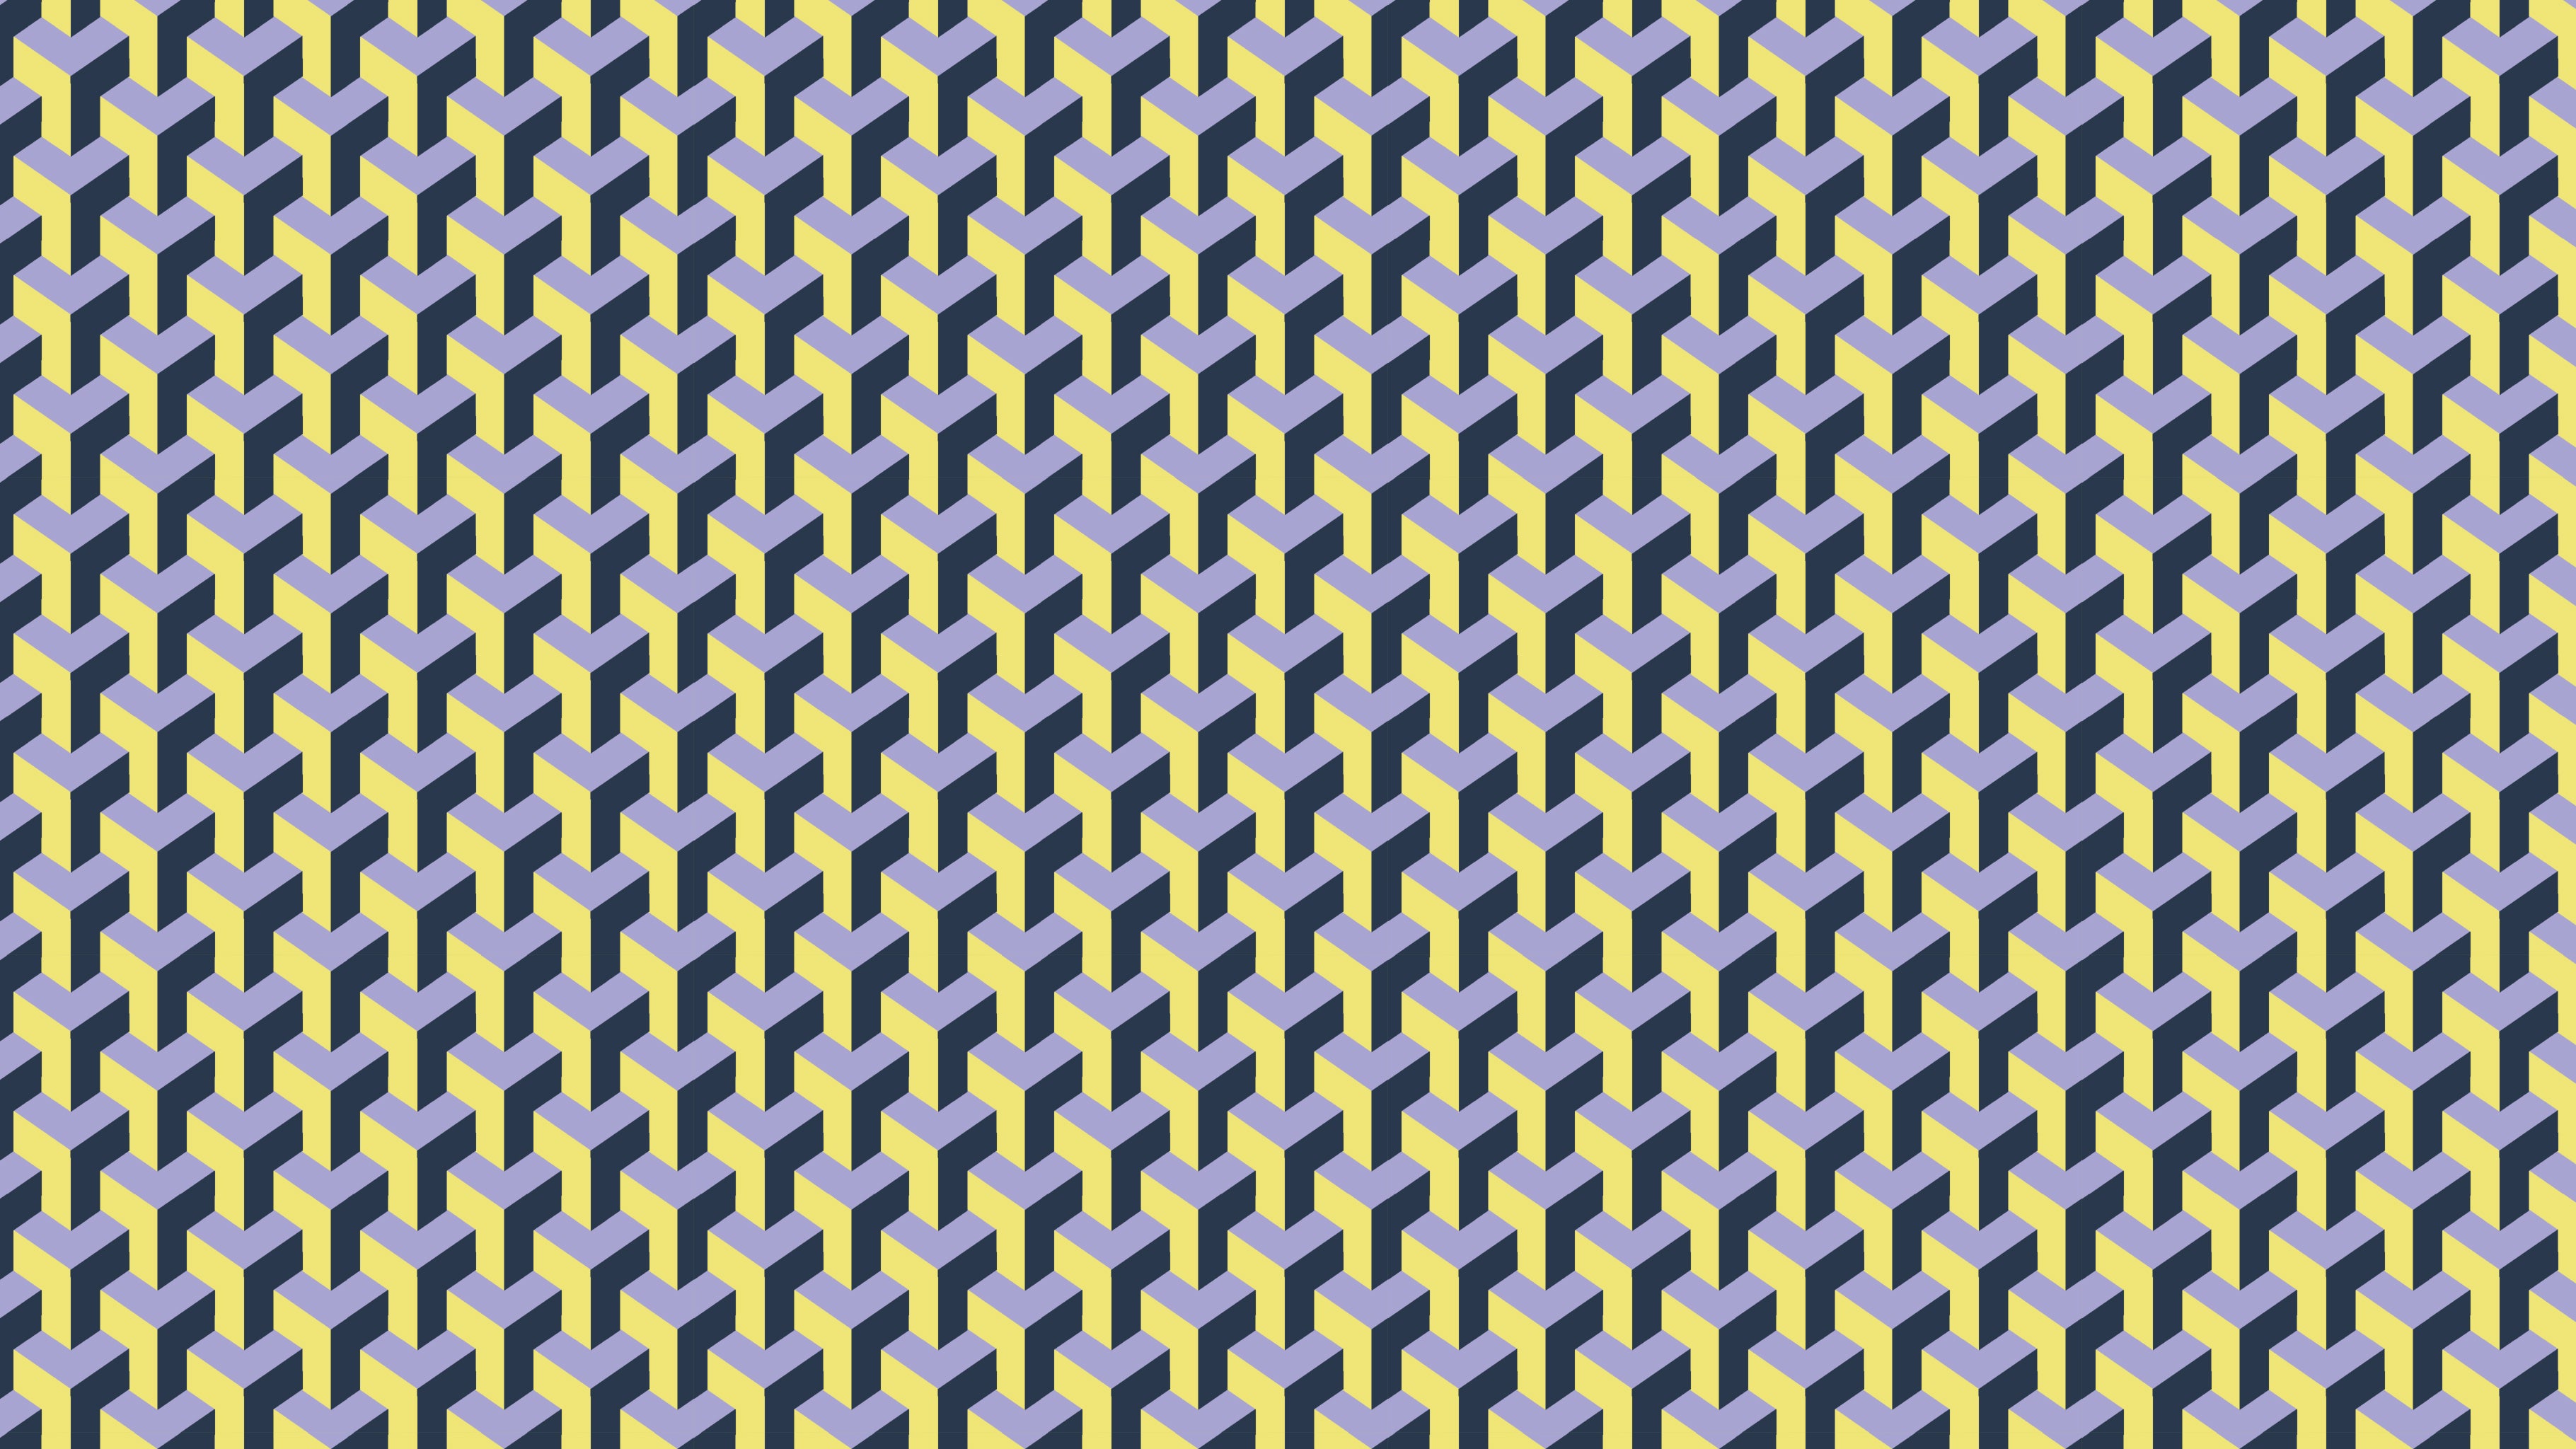 Geometric Blocks Lilac Buttercup Navy by Studio Ten Design